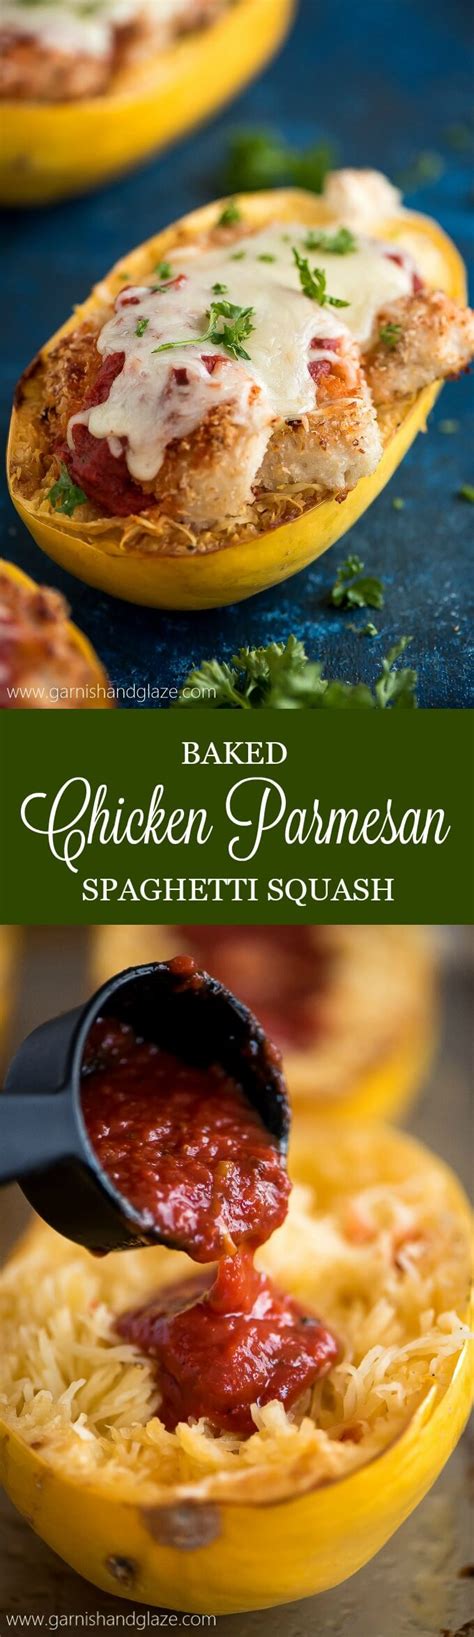 Baked Chicken Parmesan Spaghetti Squash Garnish And Glaze